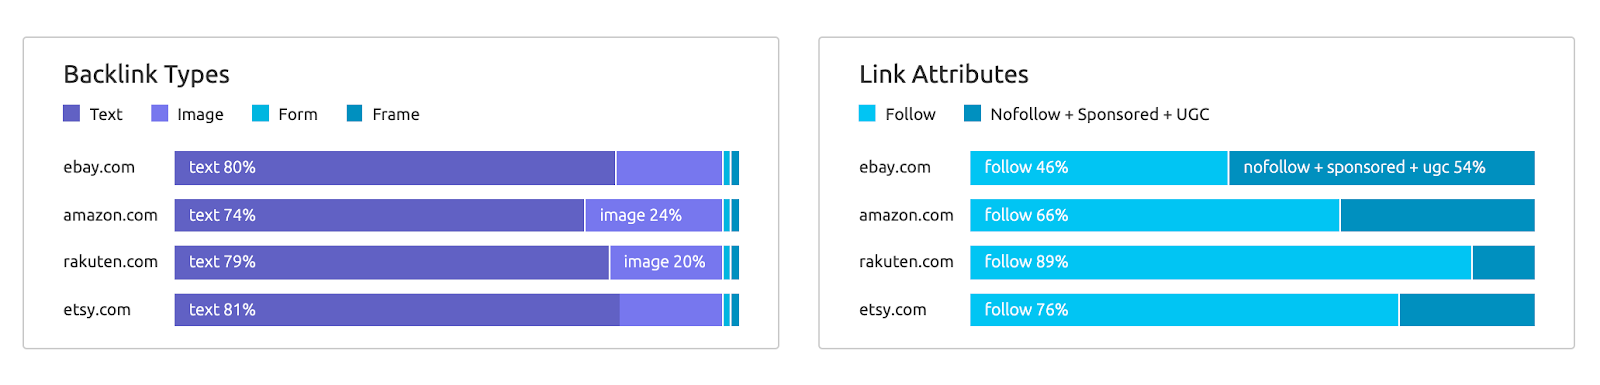 SEMrush Backlink Analytics Backlink Types and Link Attributes data